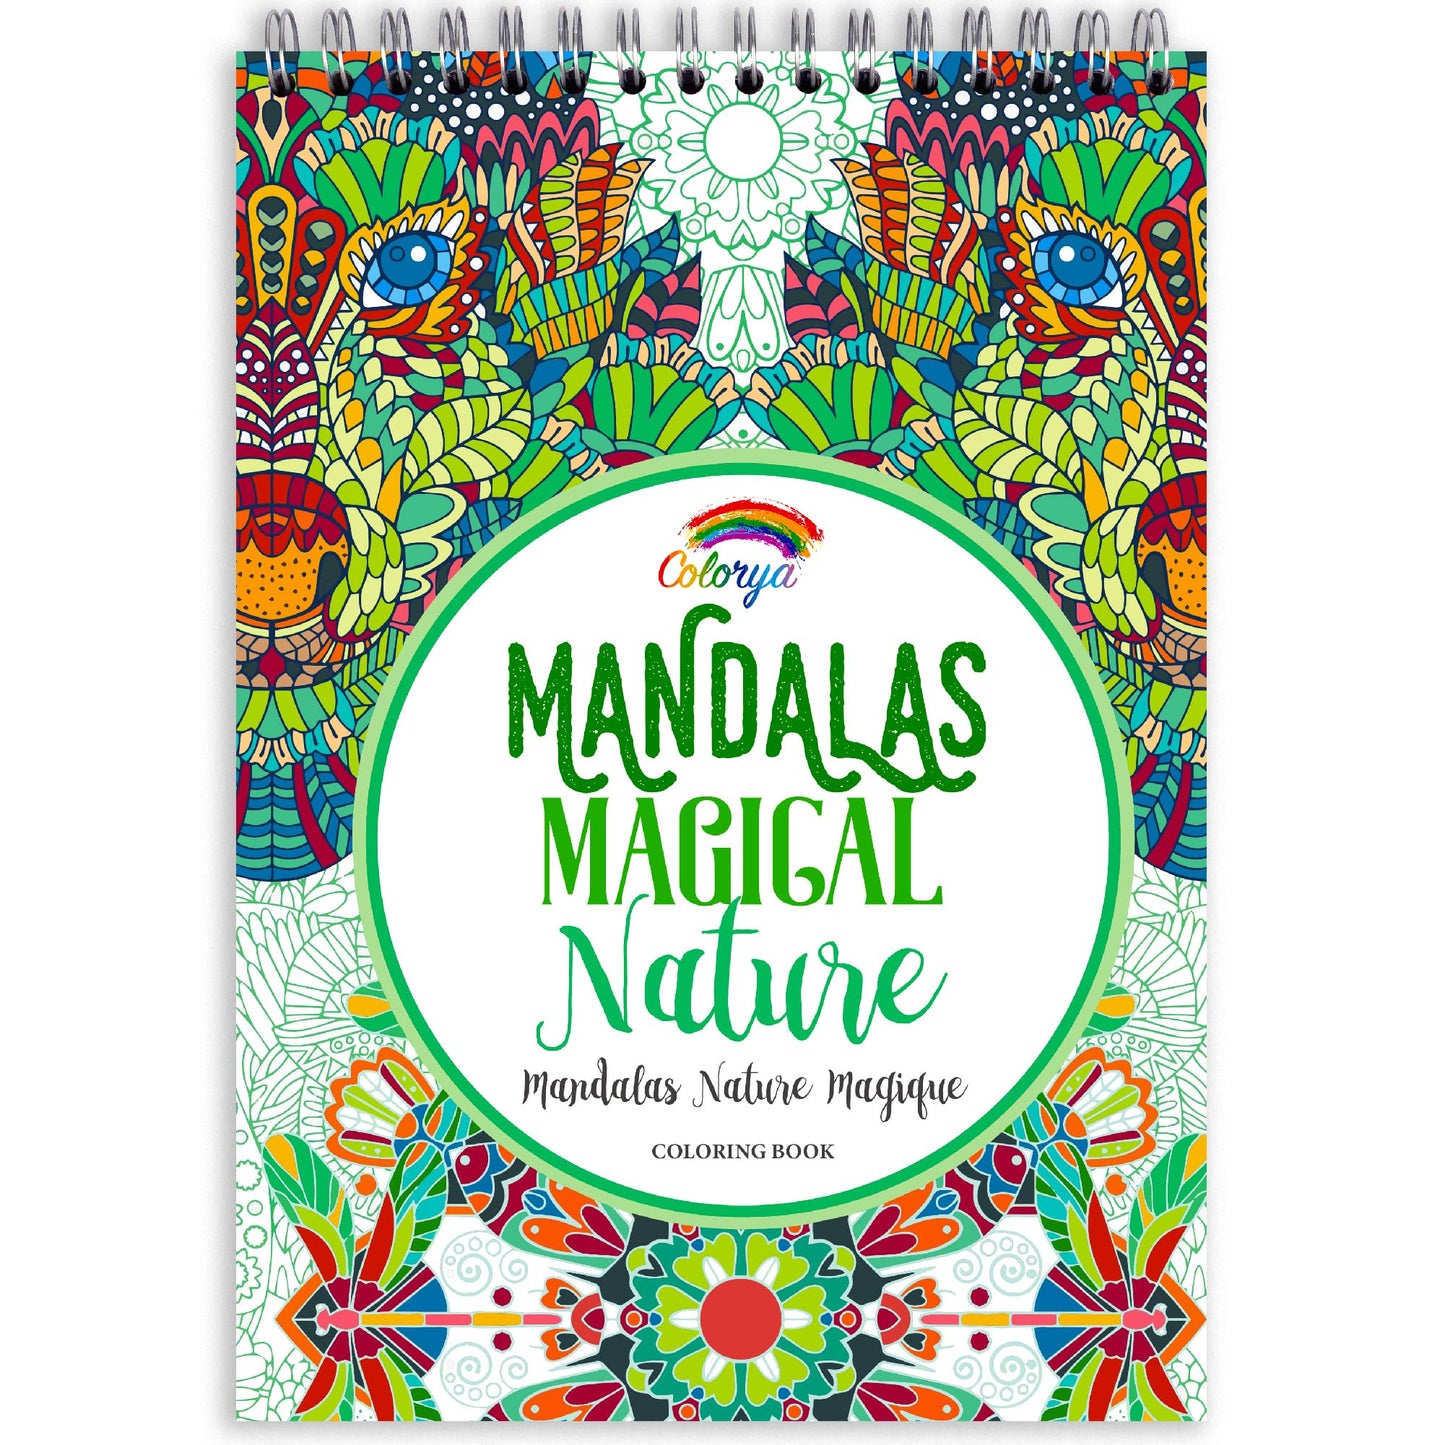 Mandala Adult Coloring Books by Colorya - A4 Size - Mandalas Magical Nature Coloring Books for Adults - Premium Quality Paper, No Medium Bleeding,